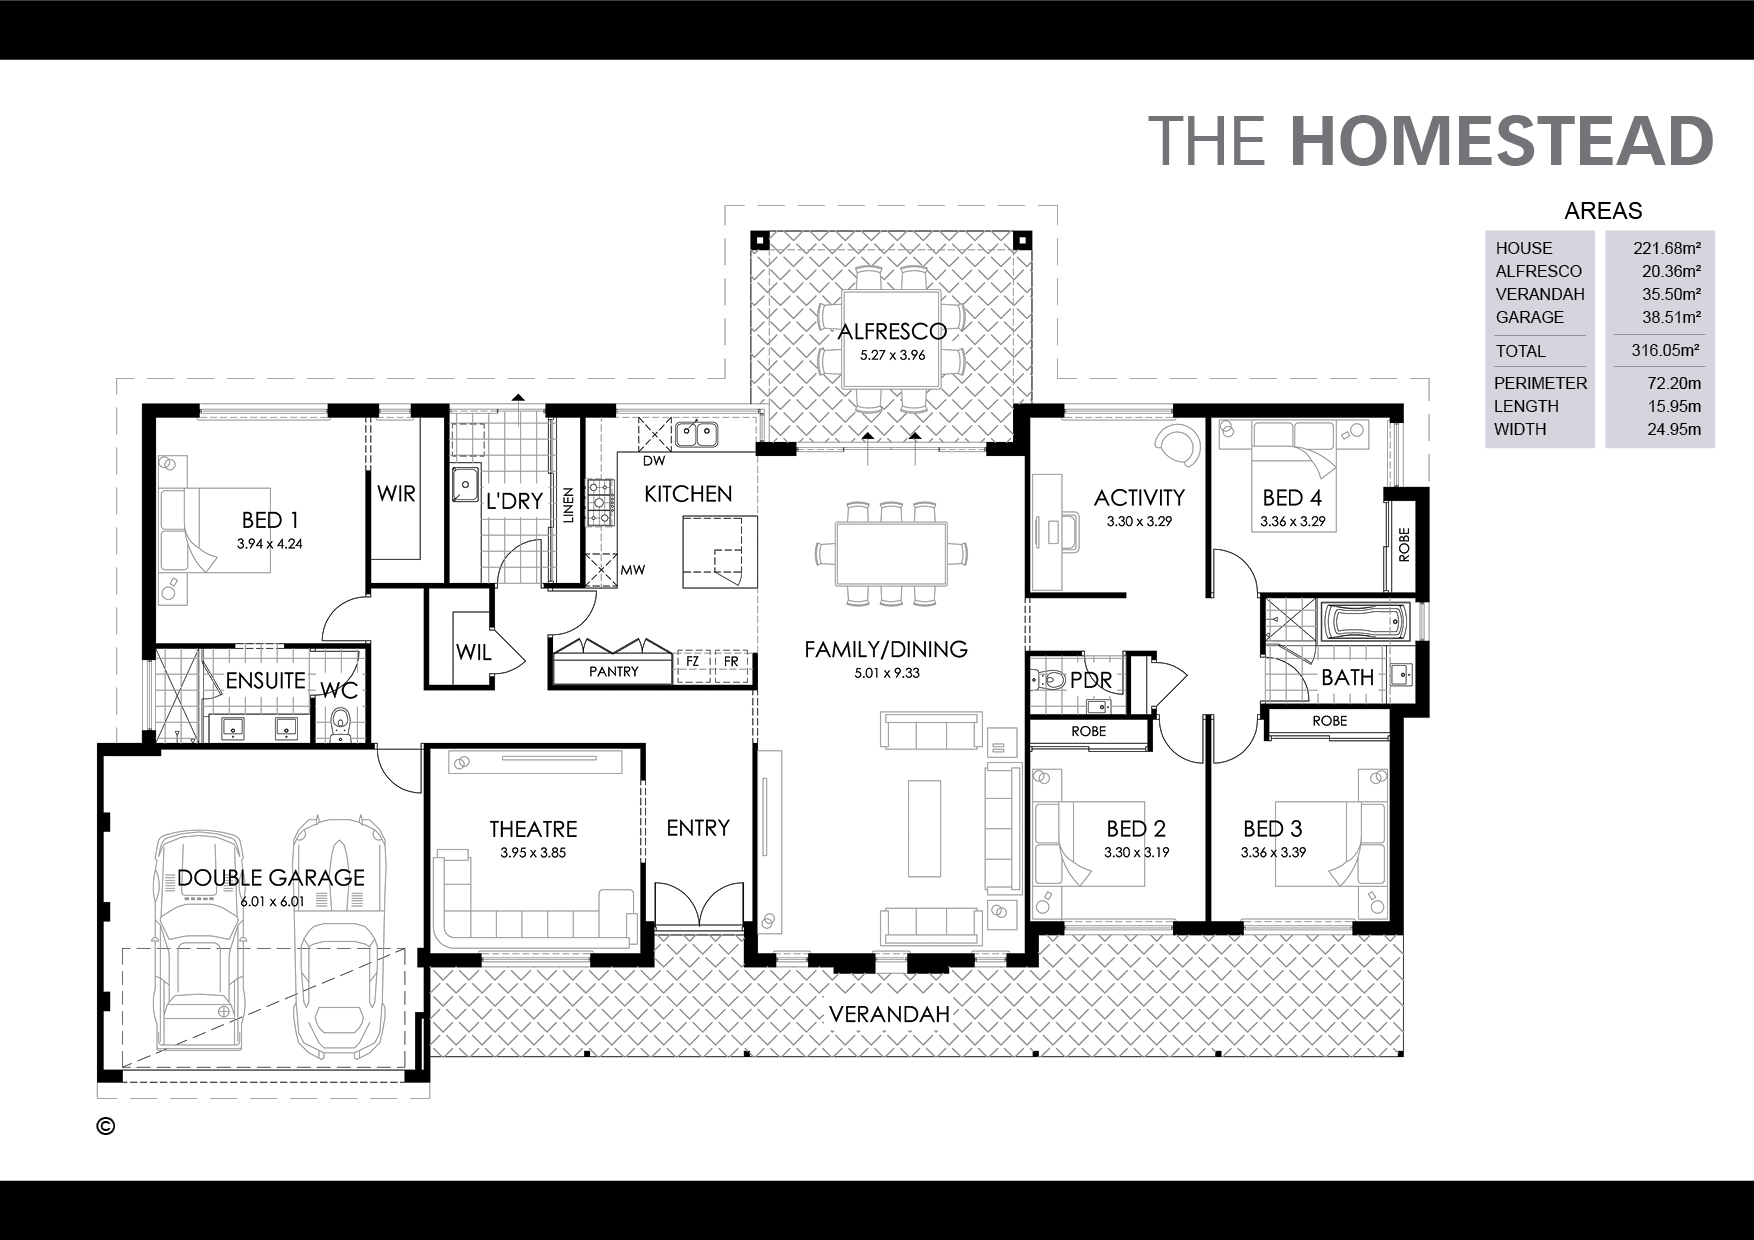 Homestead Home Design Perth Home Builders Shelford